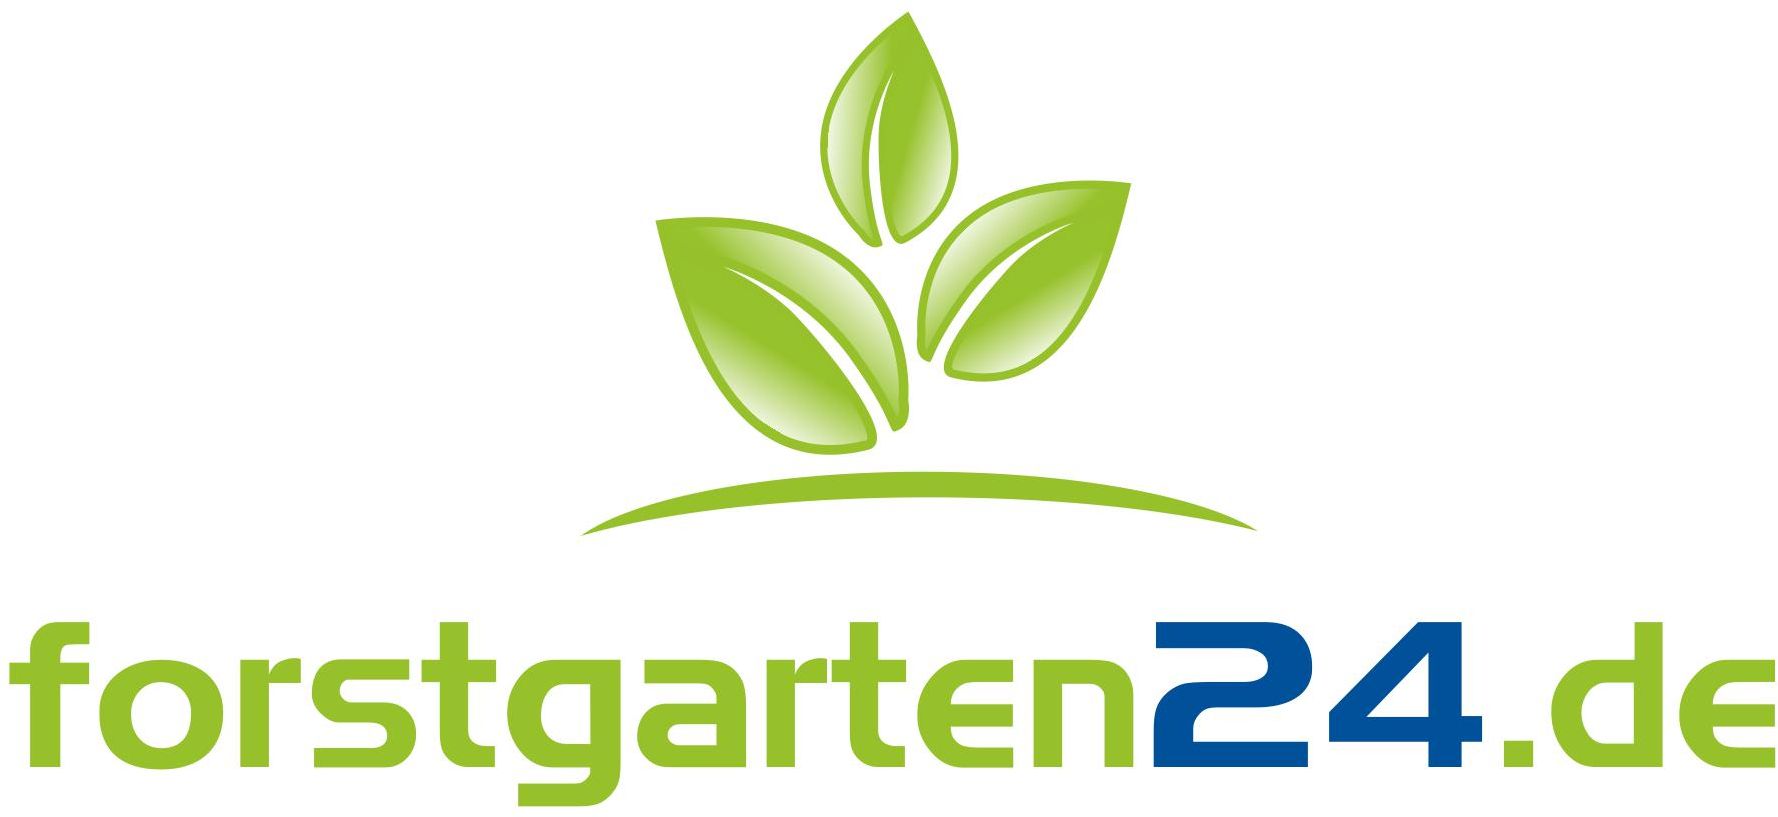 forstgarten24